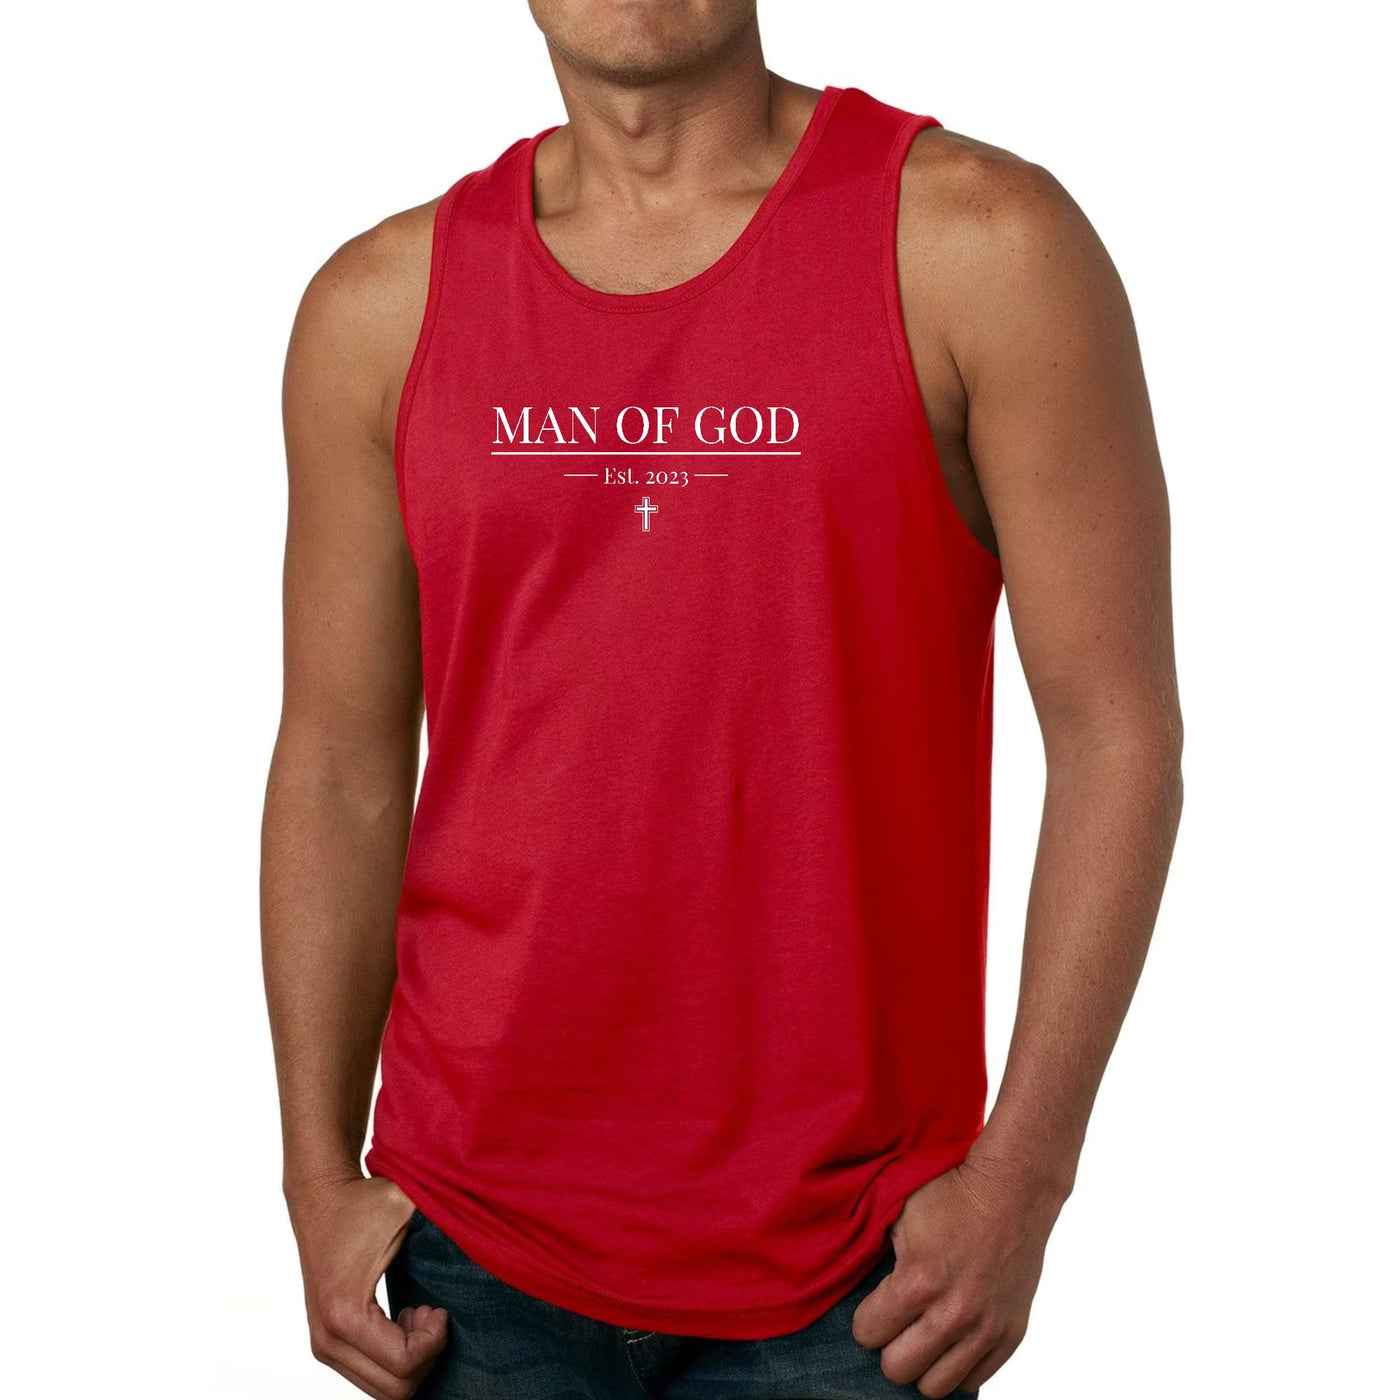 Mens Tank Top Fitness T - shirt Say It Soul Man Of God - Tops